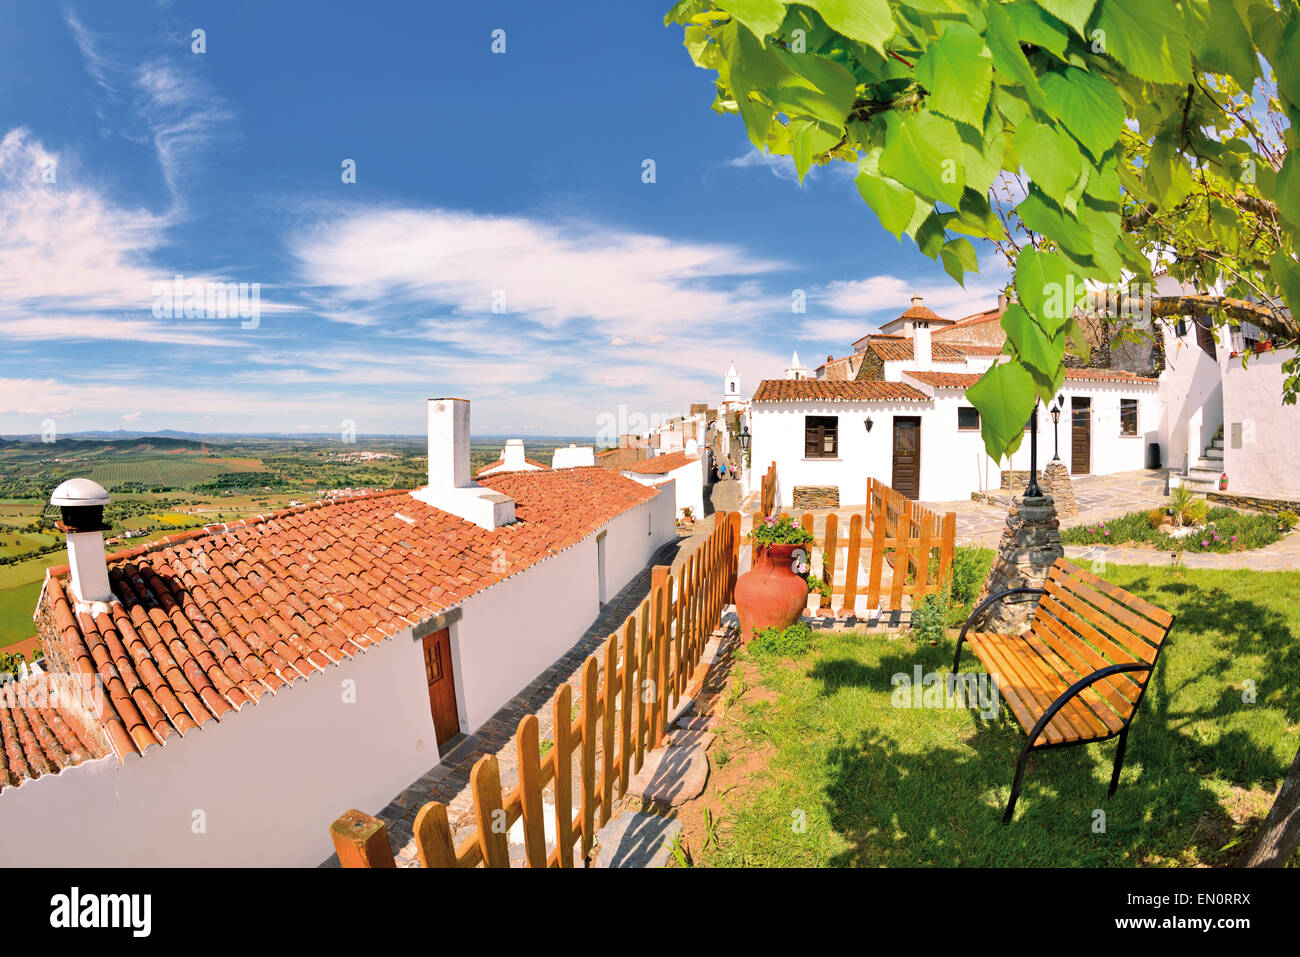 Portugal, Alentejo: View to the houses of historic village Monsaraz Stock Photo